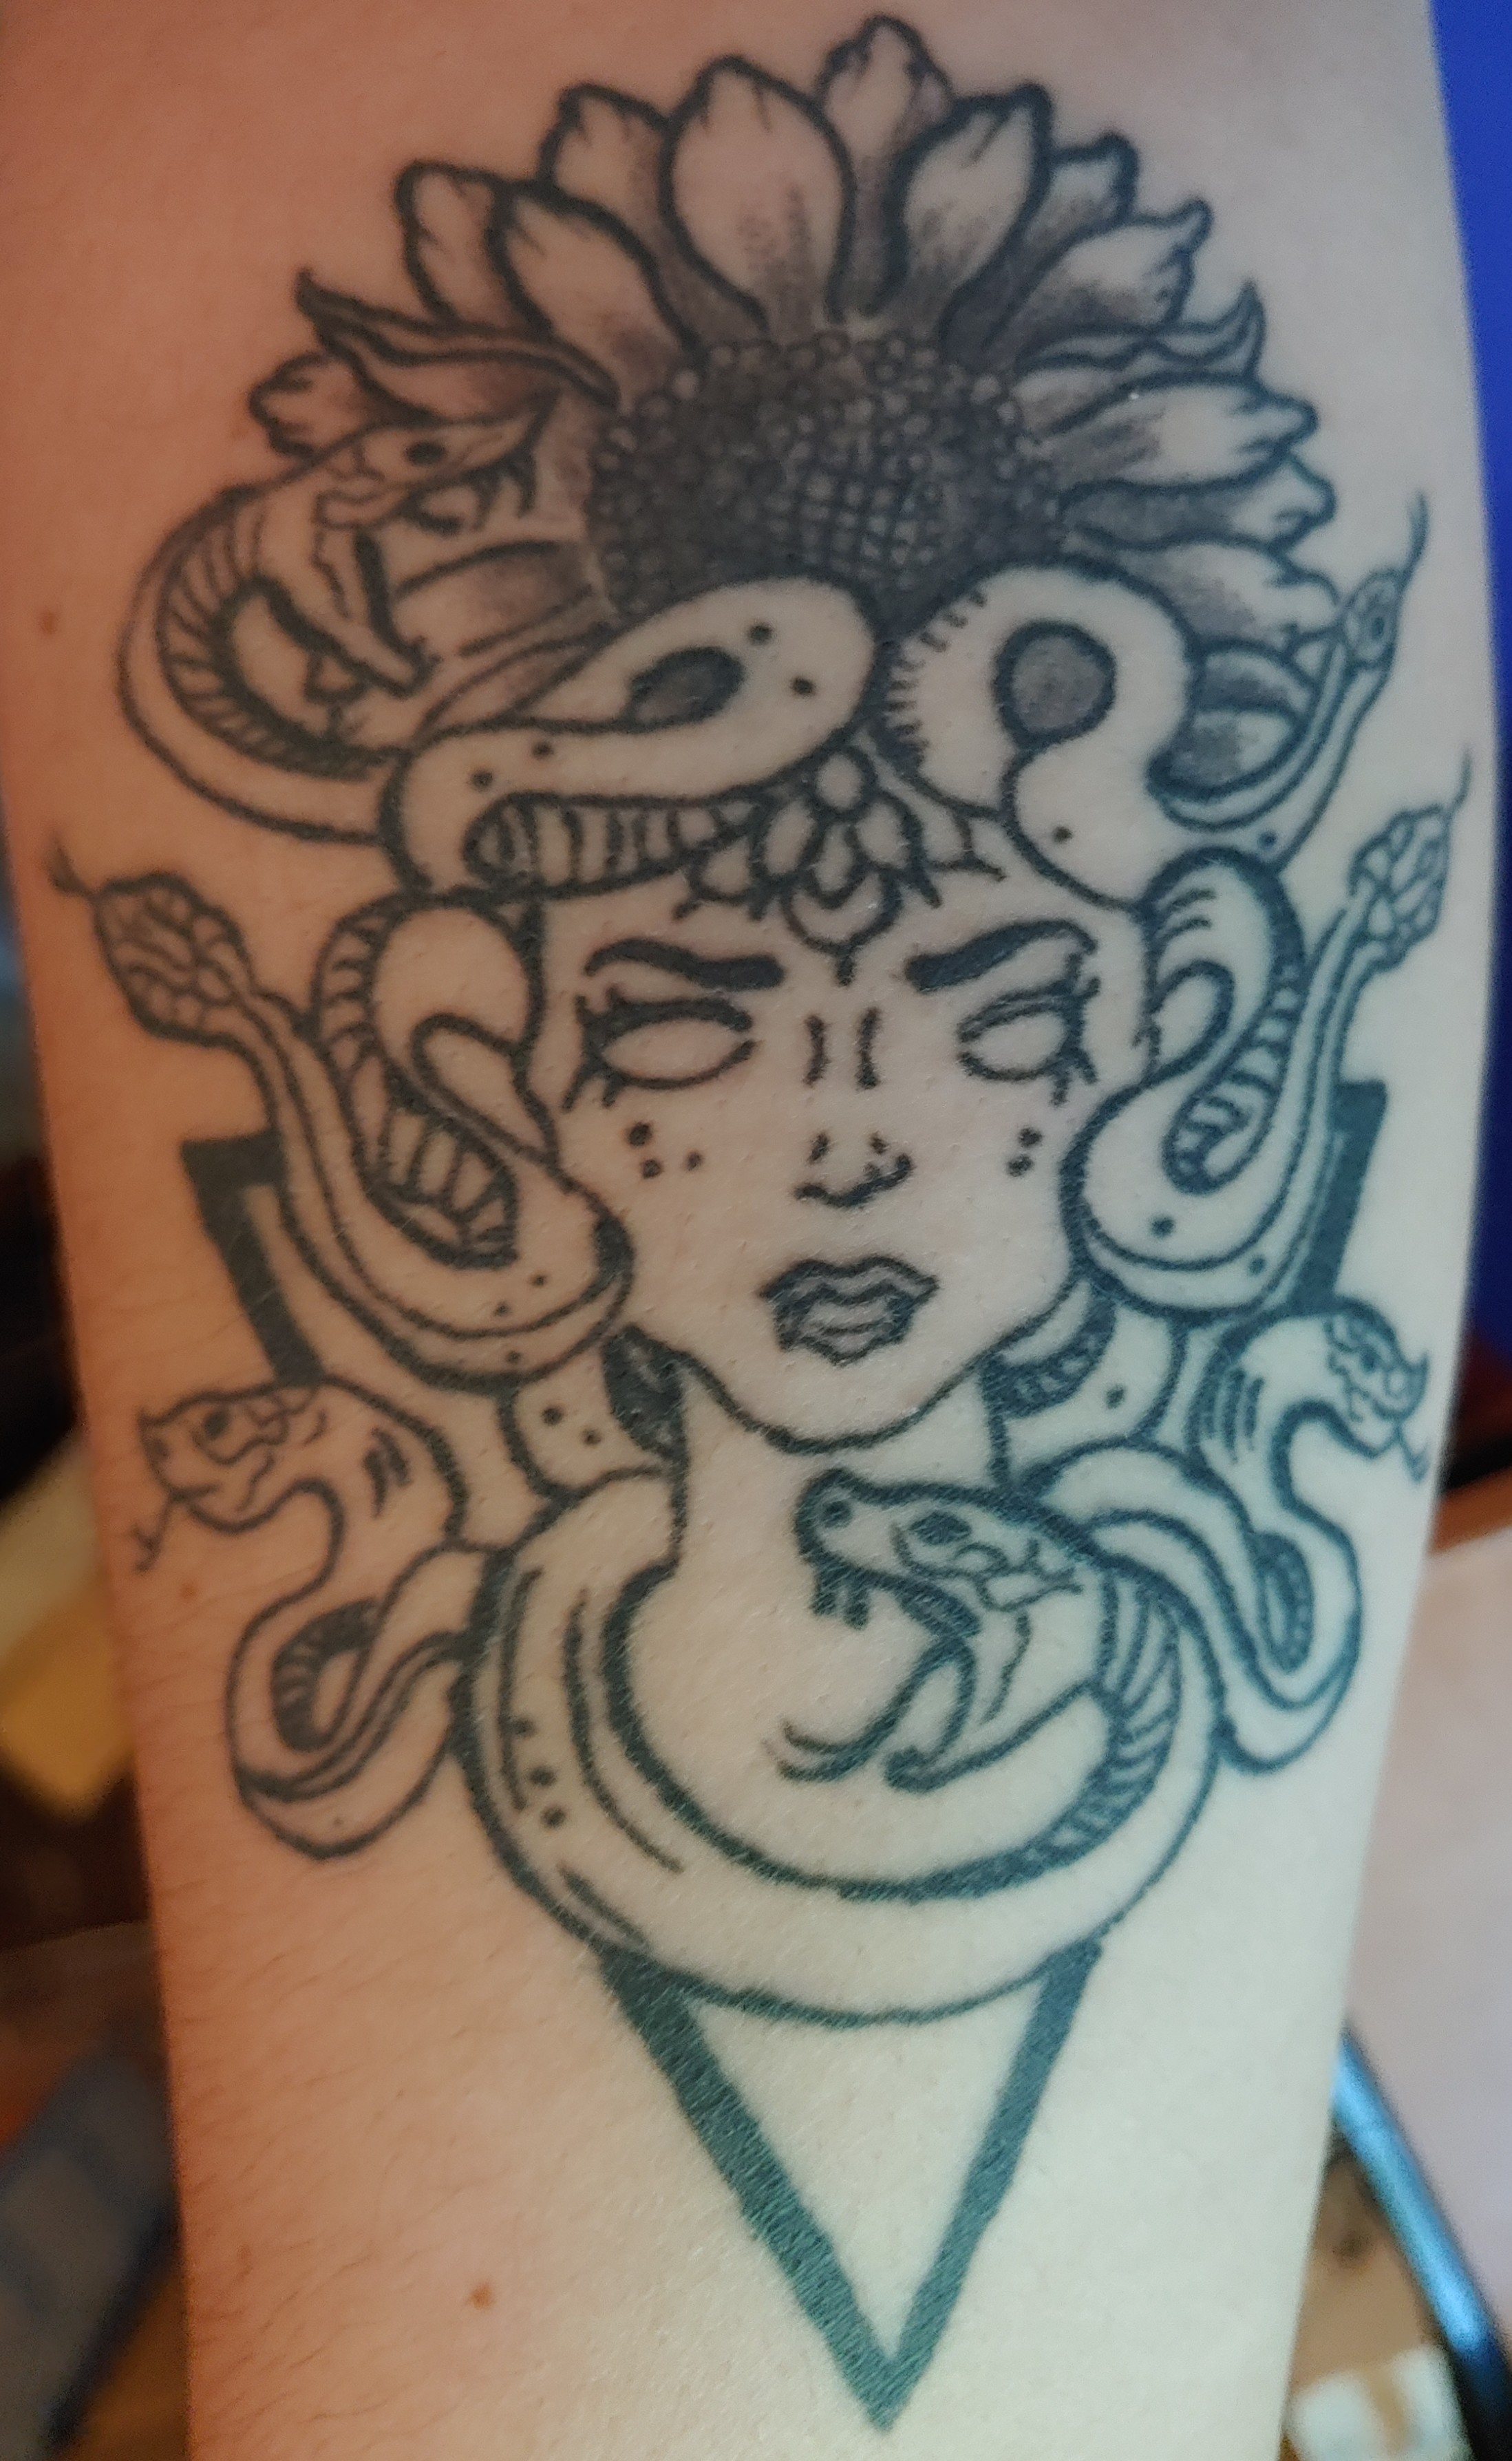 Black and grey Medusa tattoo on the forearm